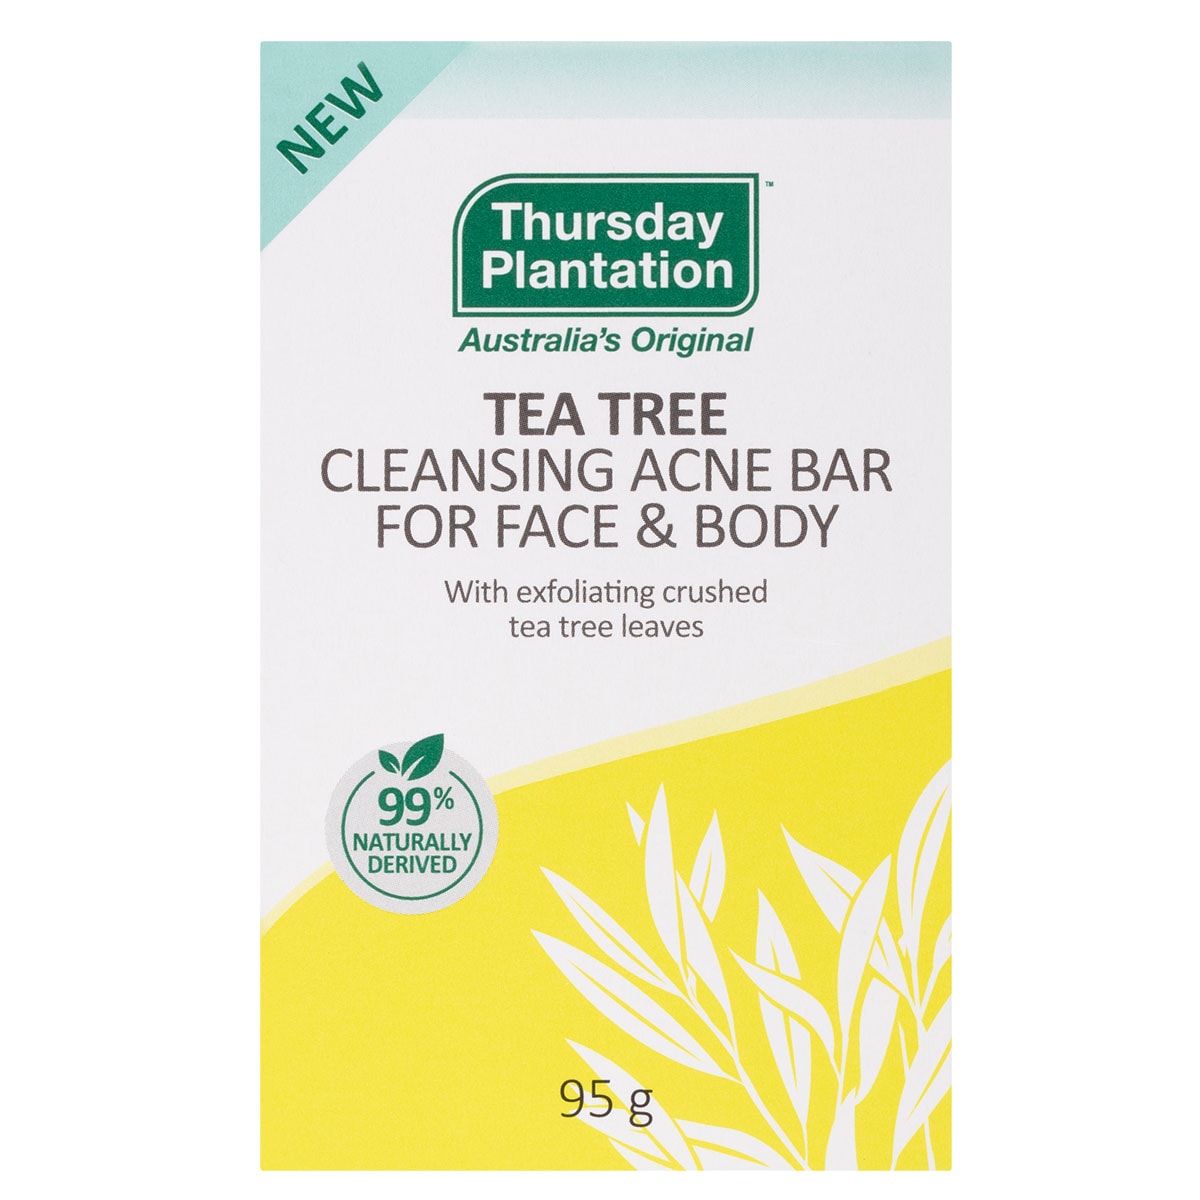 Thursday Plantation Tea Tree Cleansing Acne Bar for Face & Body 1 Pack